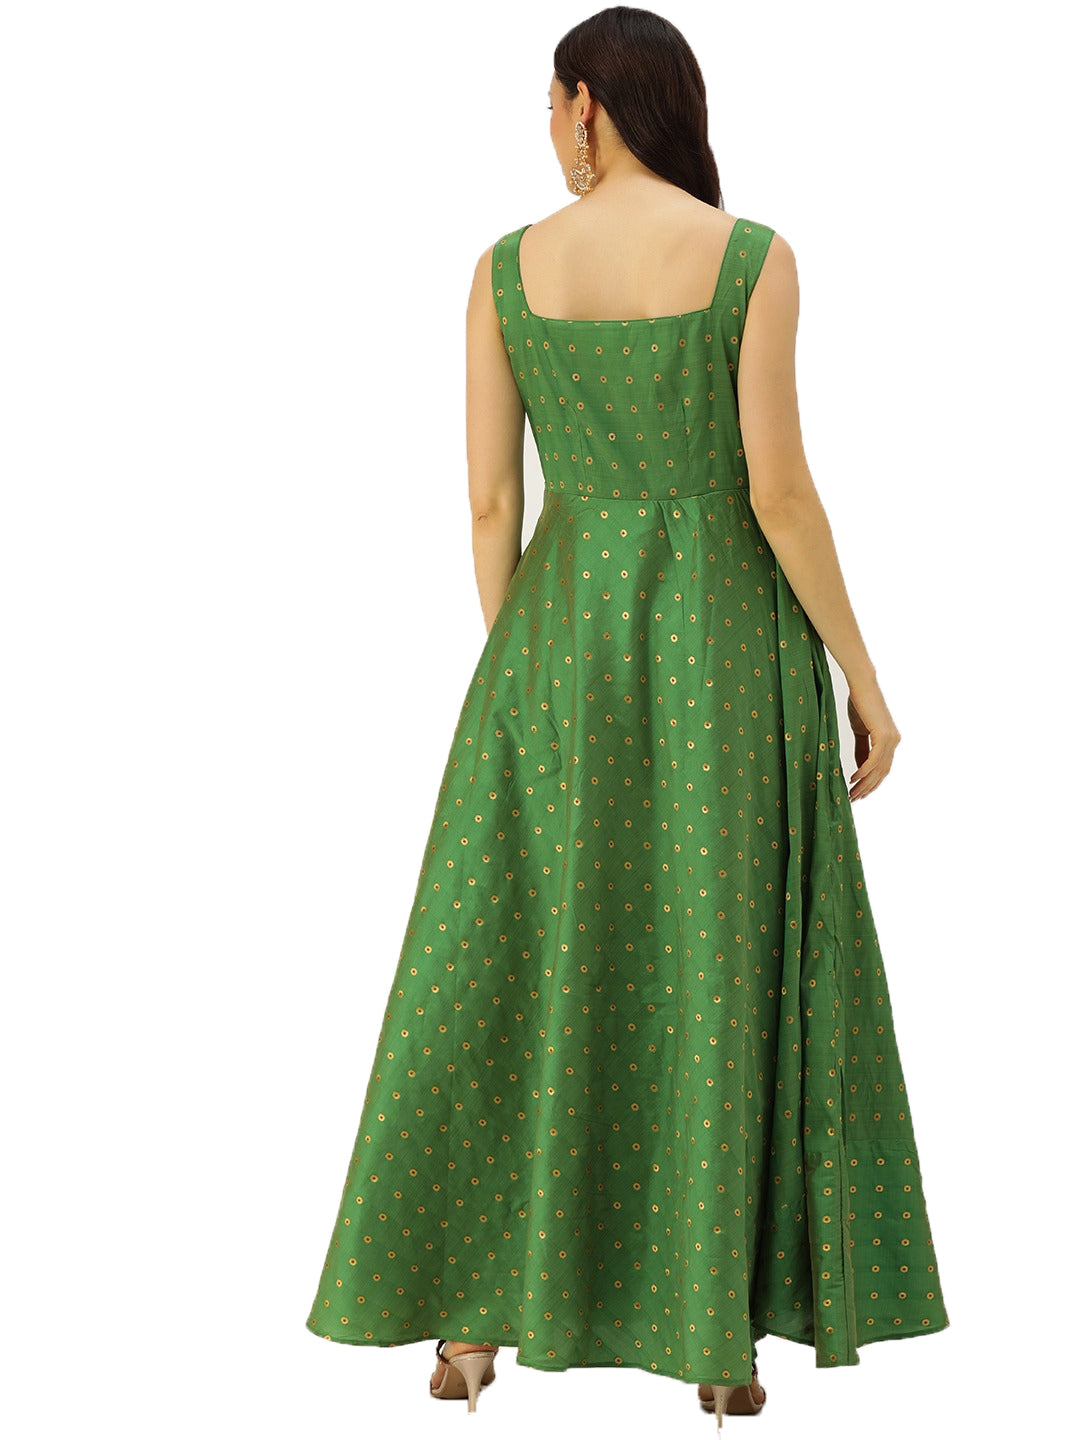 Green-Taffeta-Gown